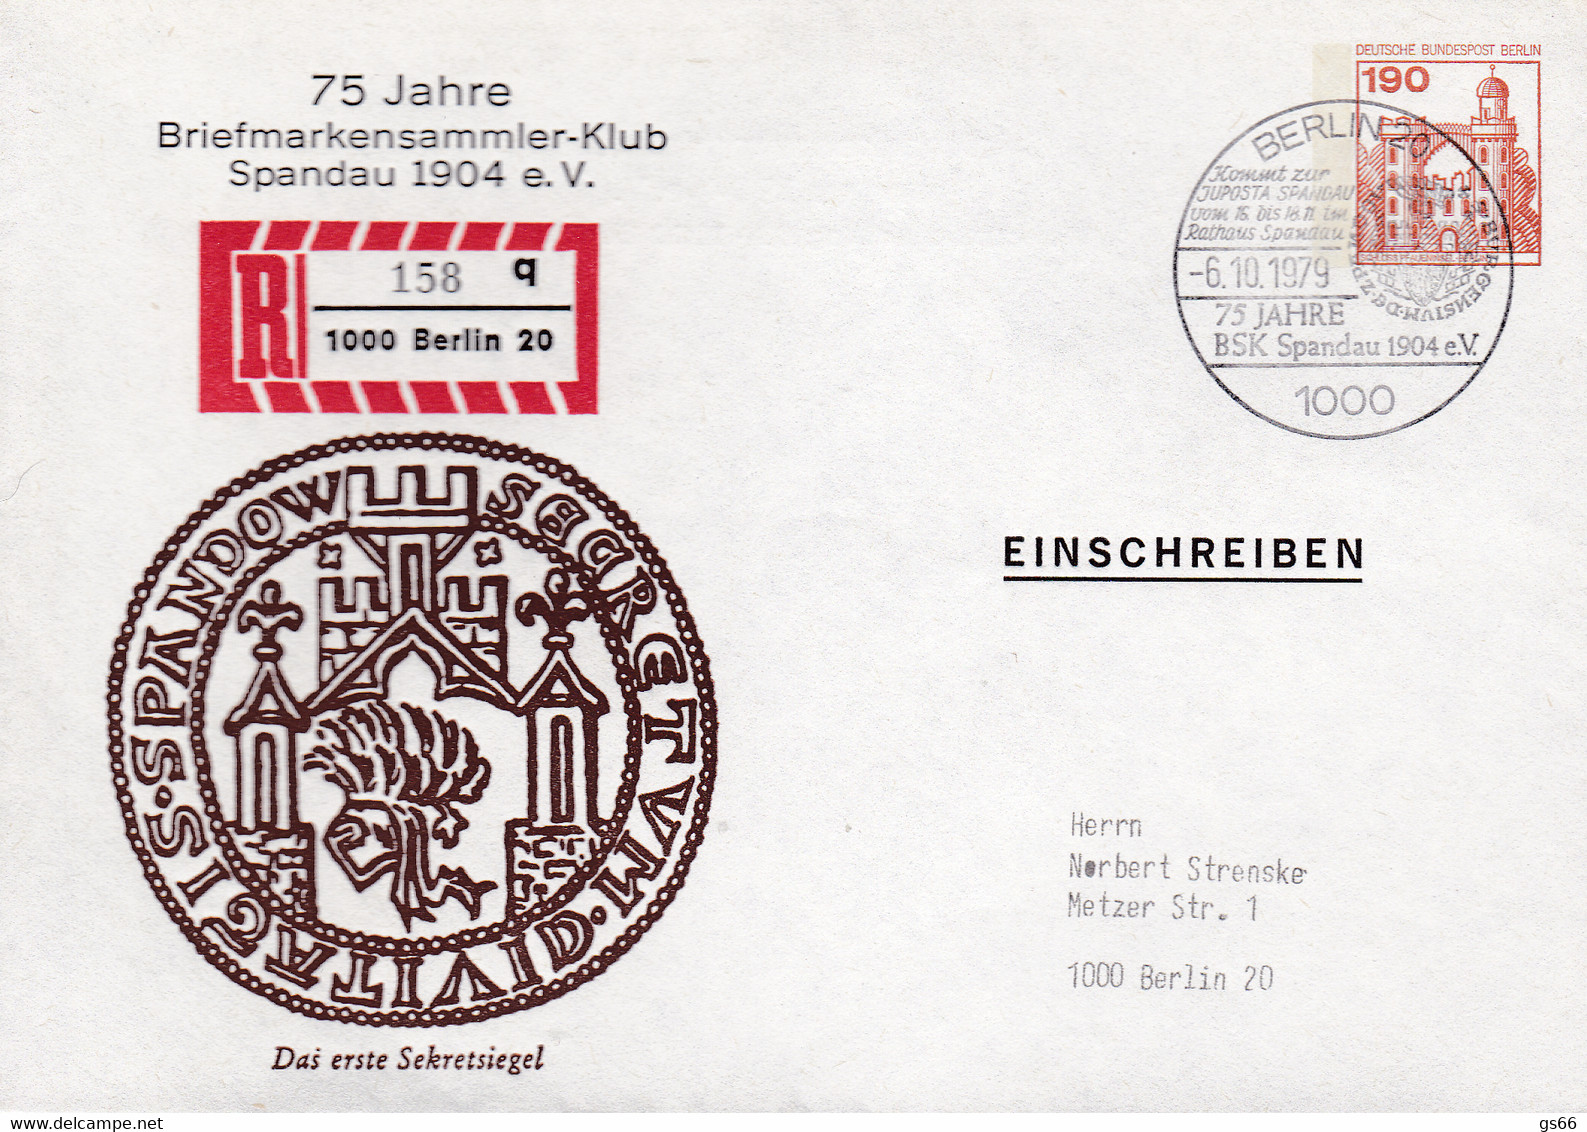 Berlin, PU 080 2/001, Briefmarkensammler-Klub Spandau, Eingedruckter R-Zettel, Nr. 158 Q - Private Covers - Used